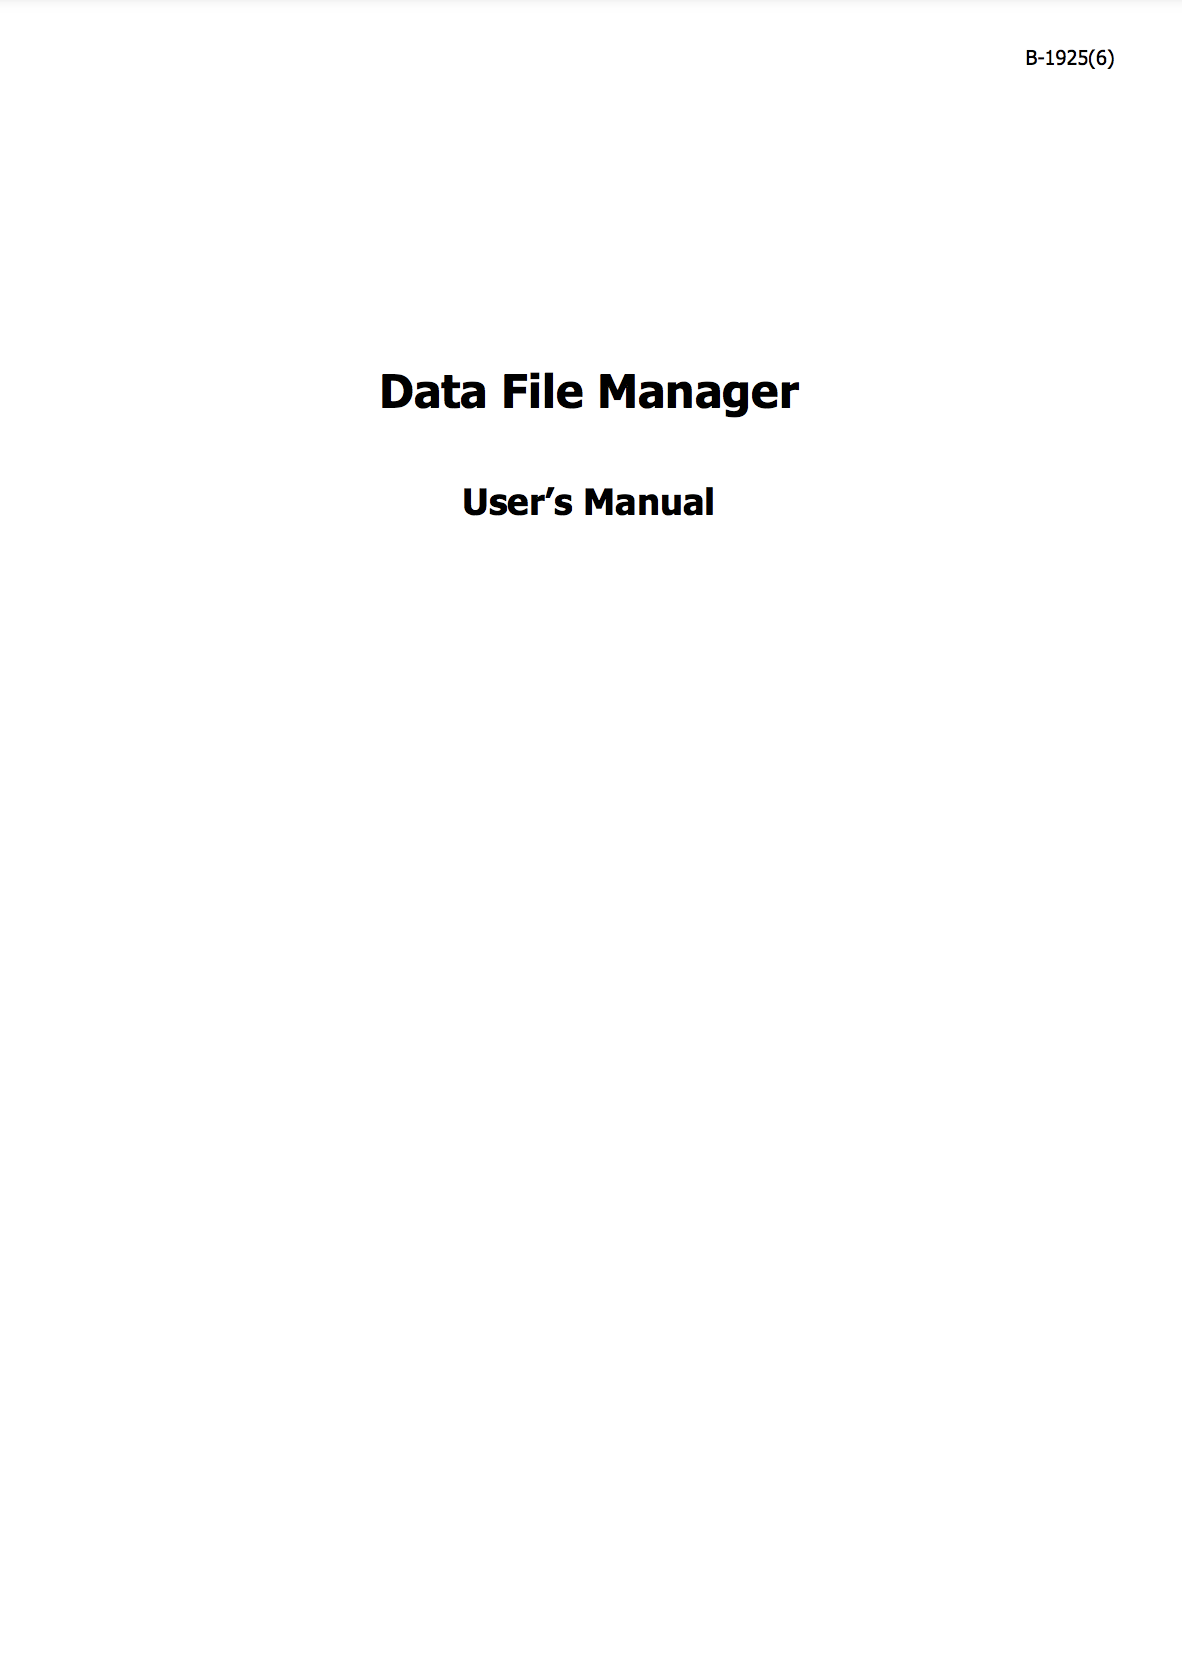 IDEC User Manual: Data File Manager